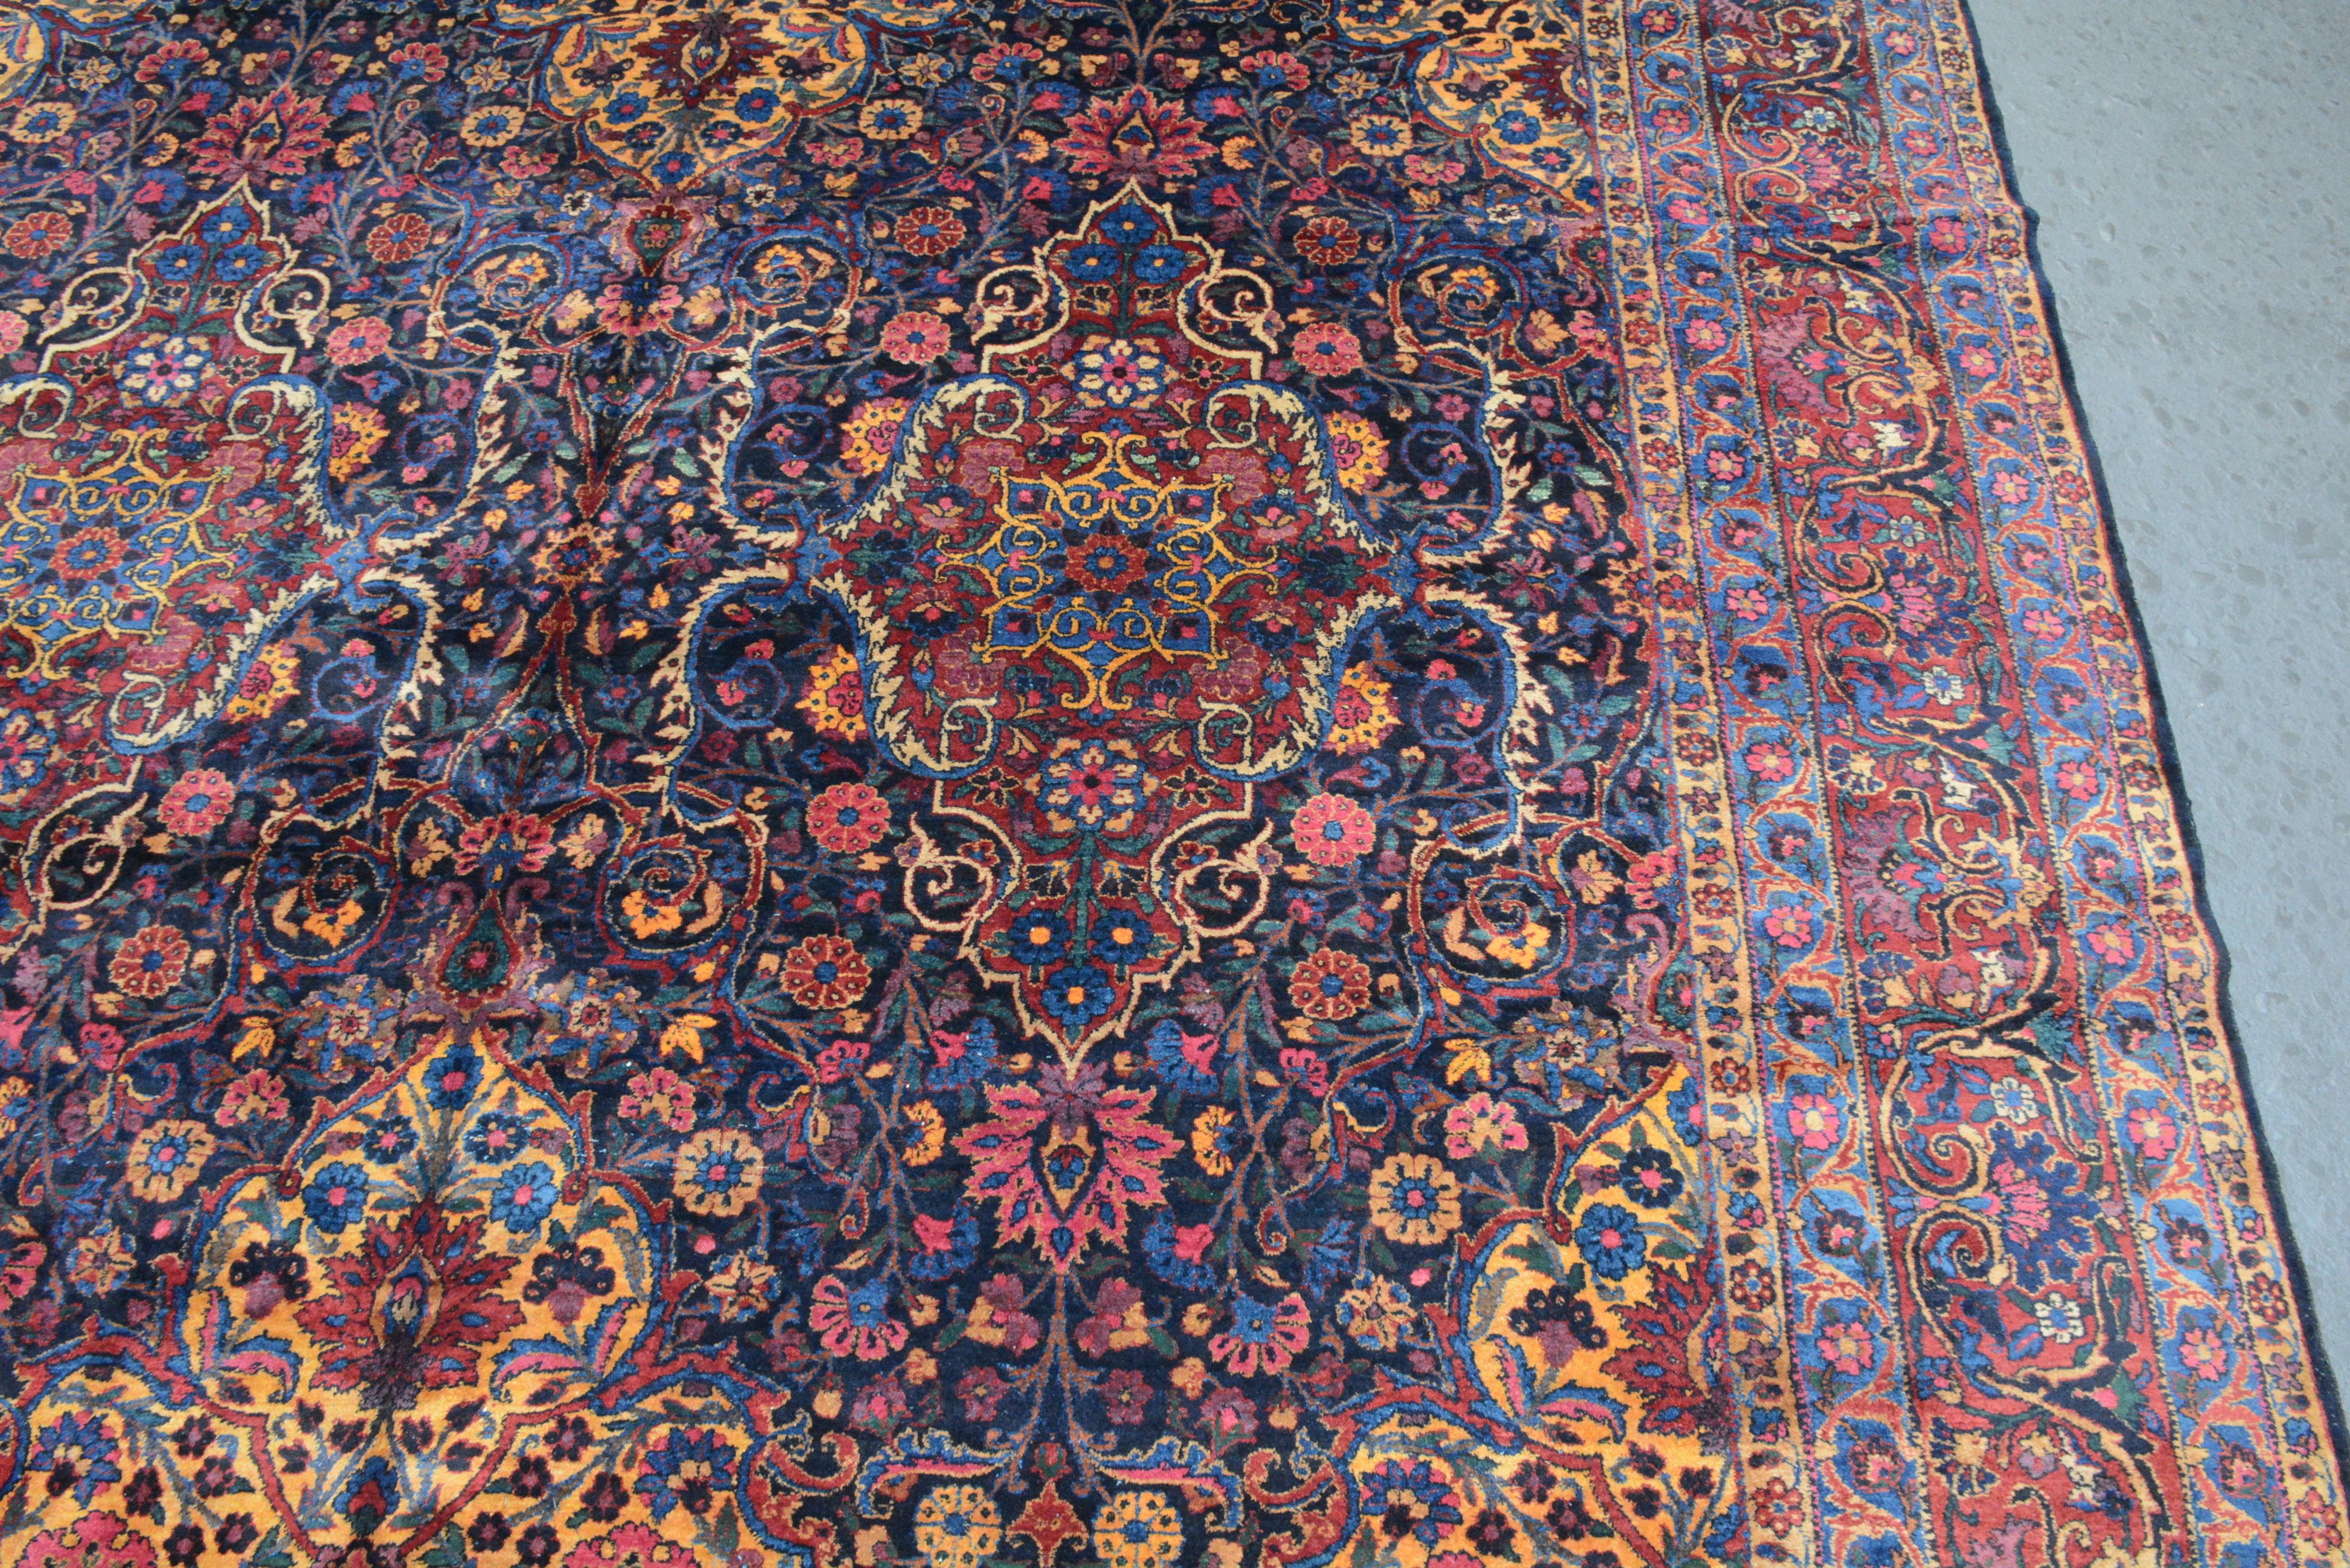 Woven Antique Signed Persian Kerman Carpet For Sale